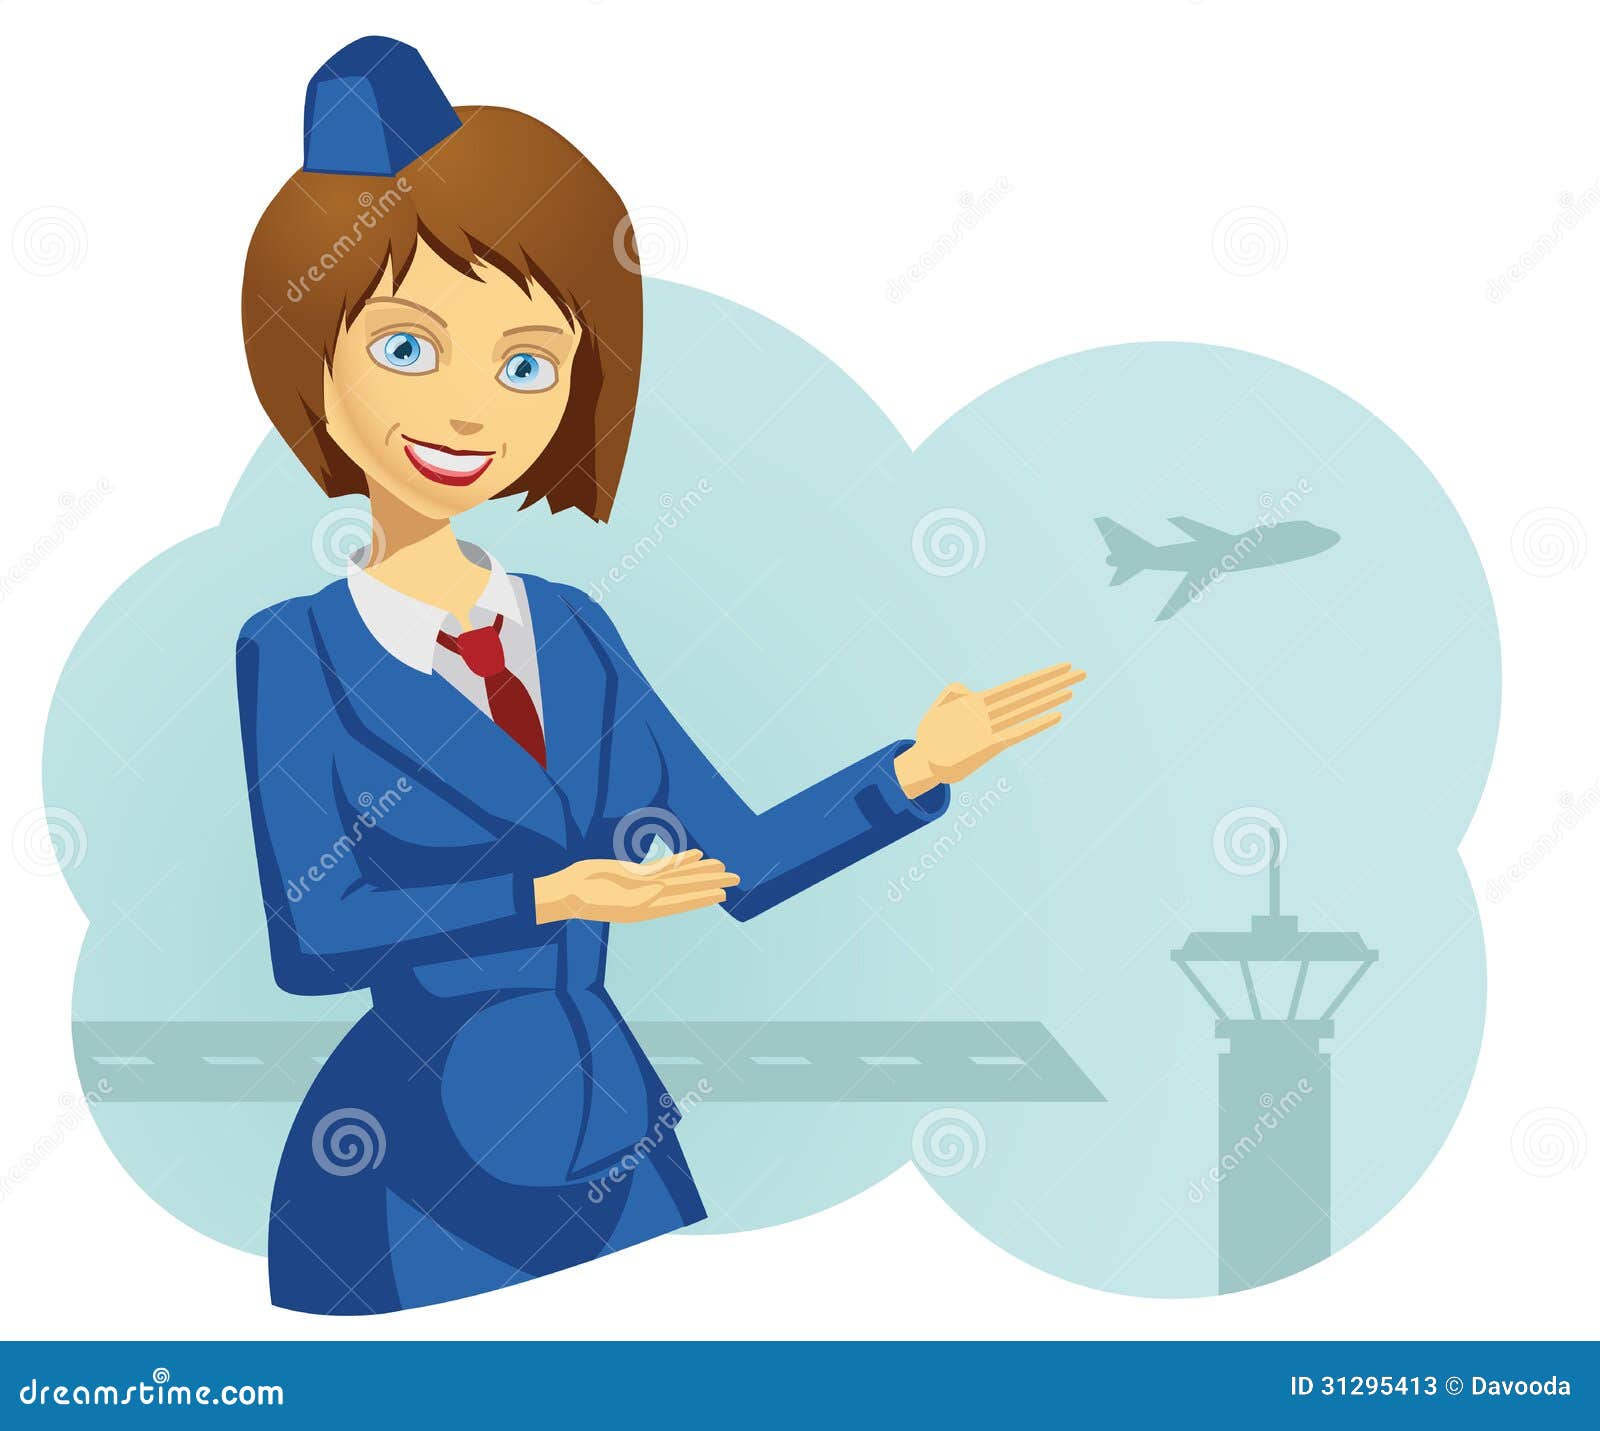 free clipart flight attendant - photo #47